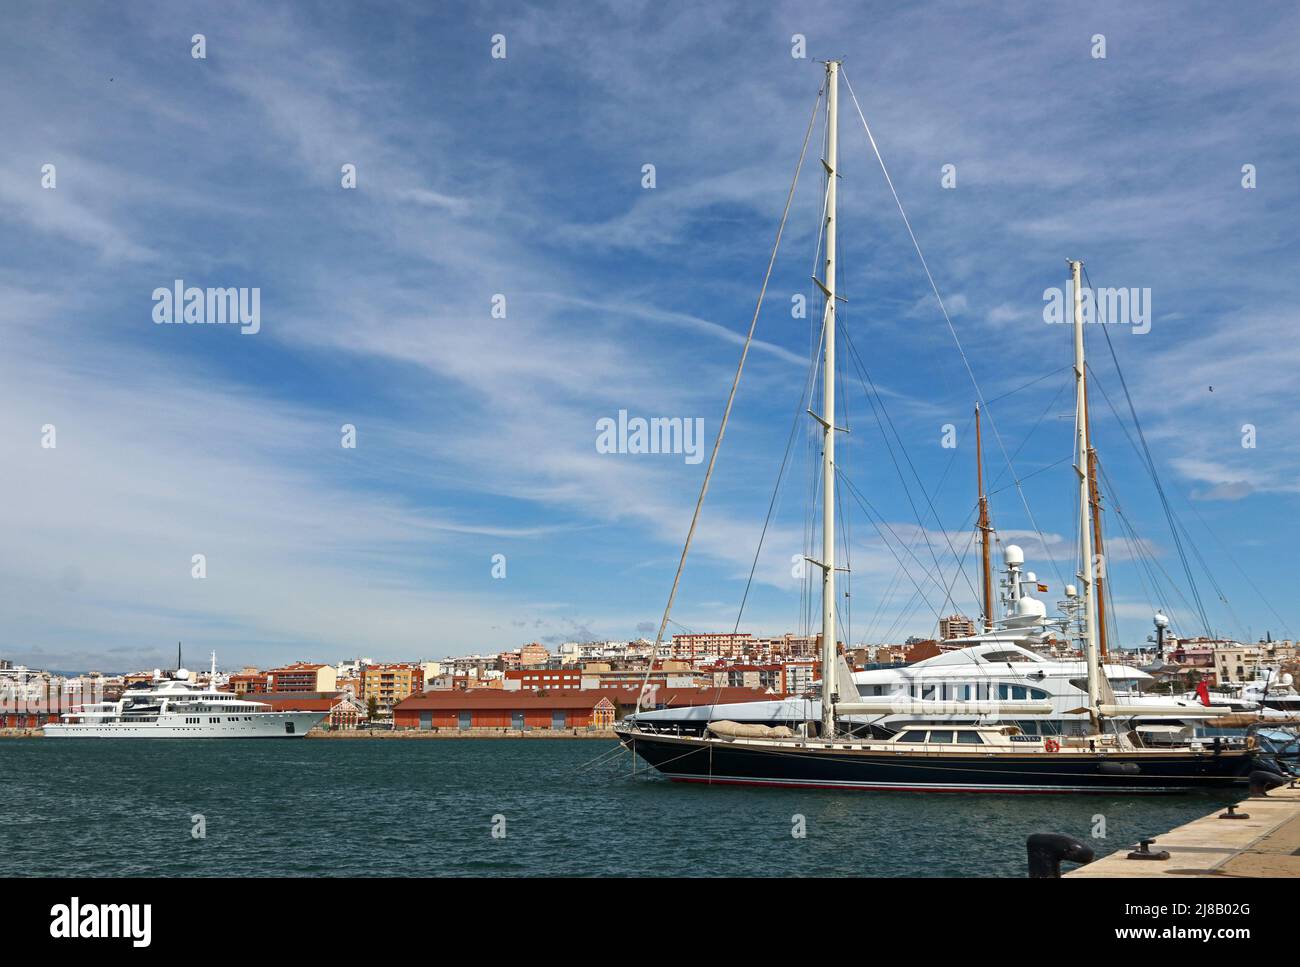 Superyachts moored in harbour, Tarragona Stock Photo